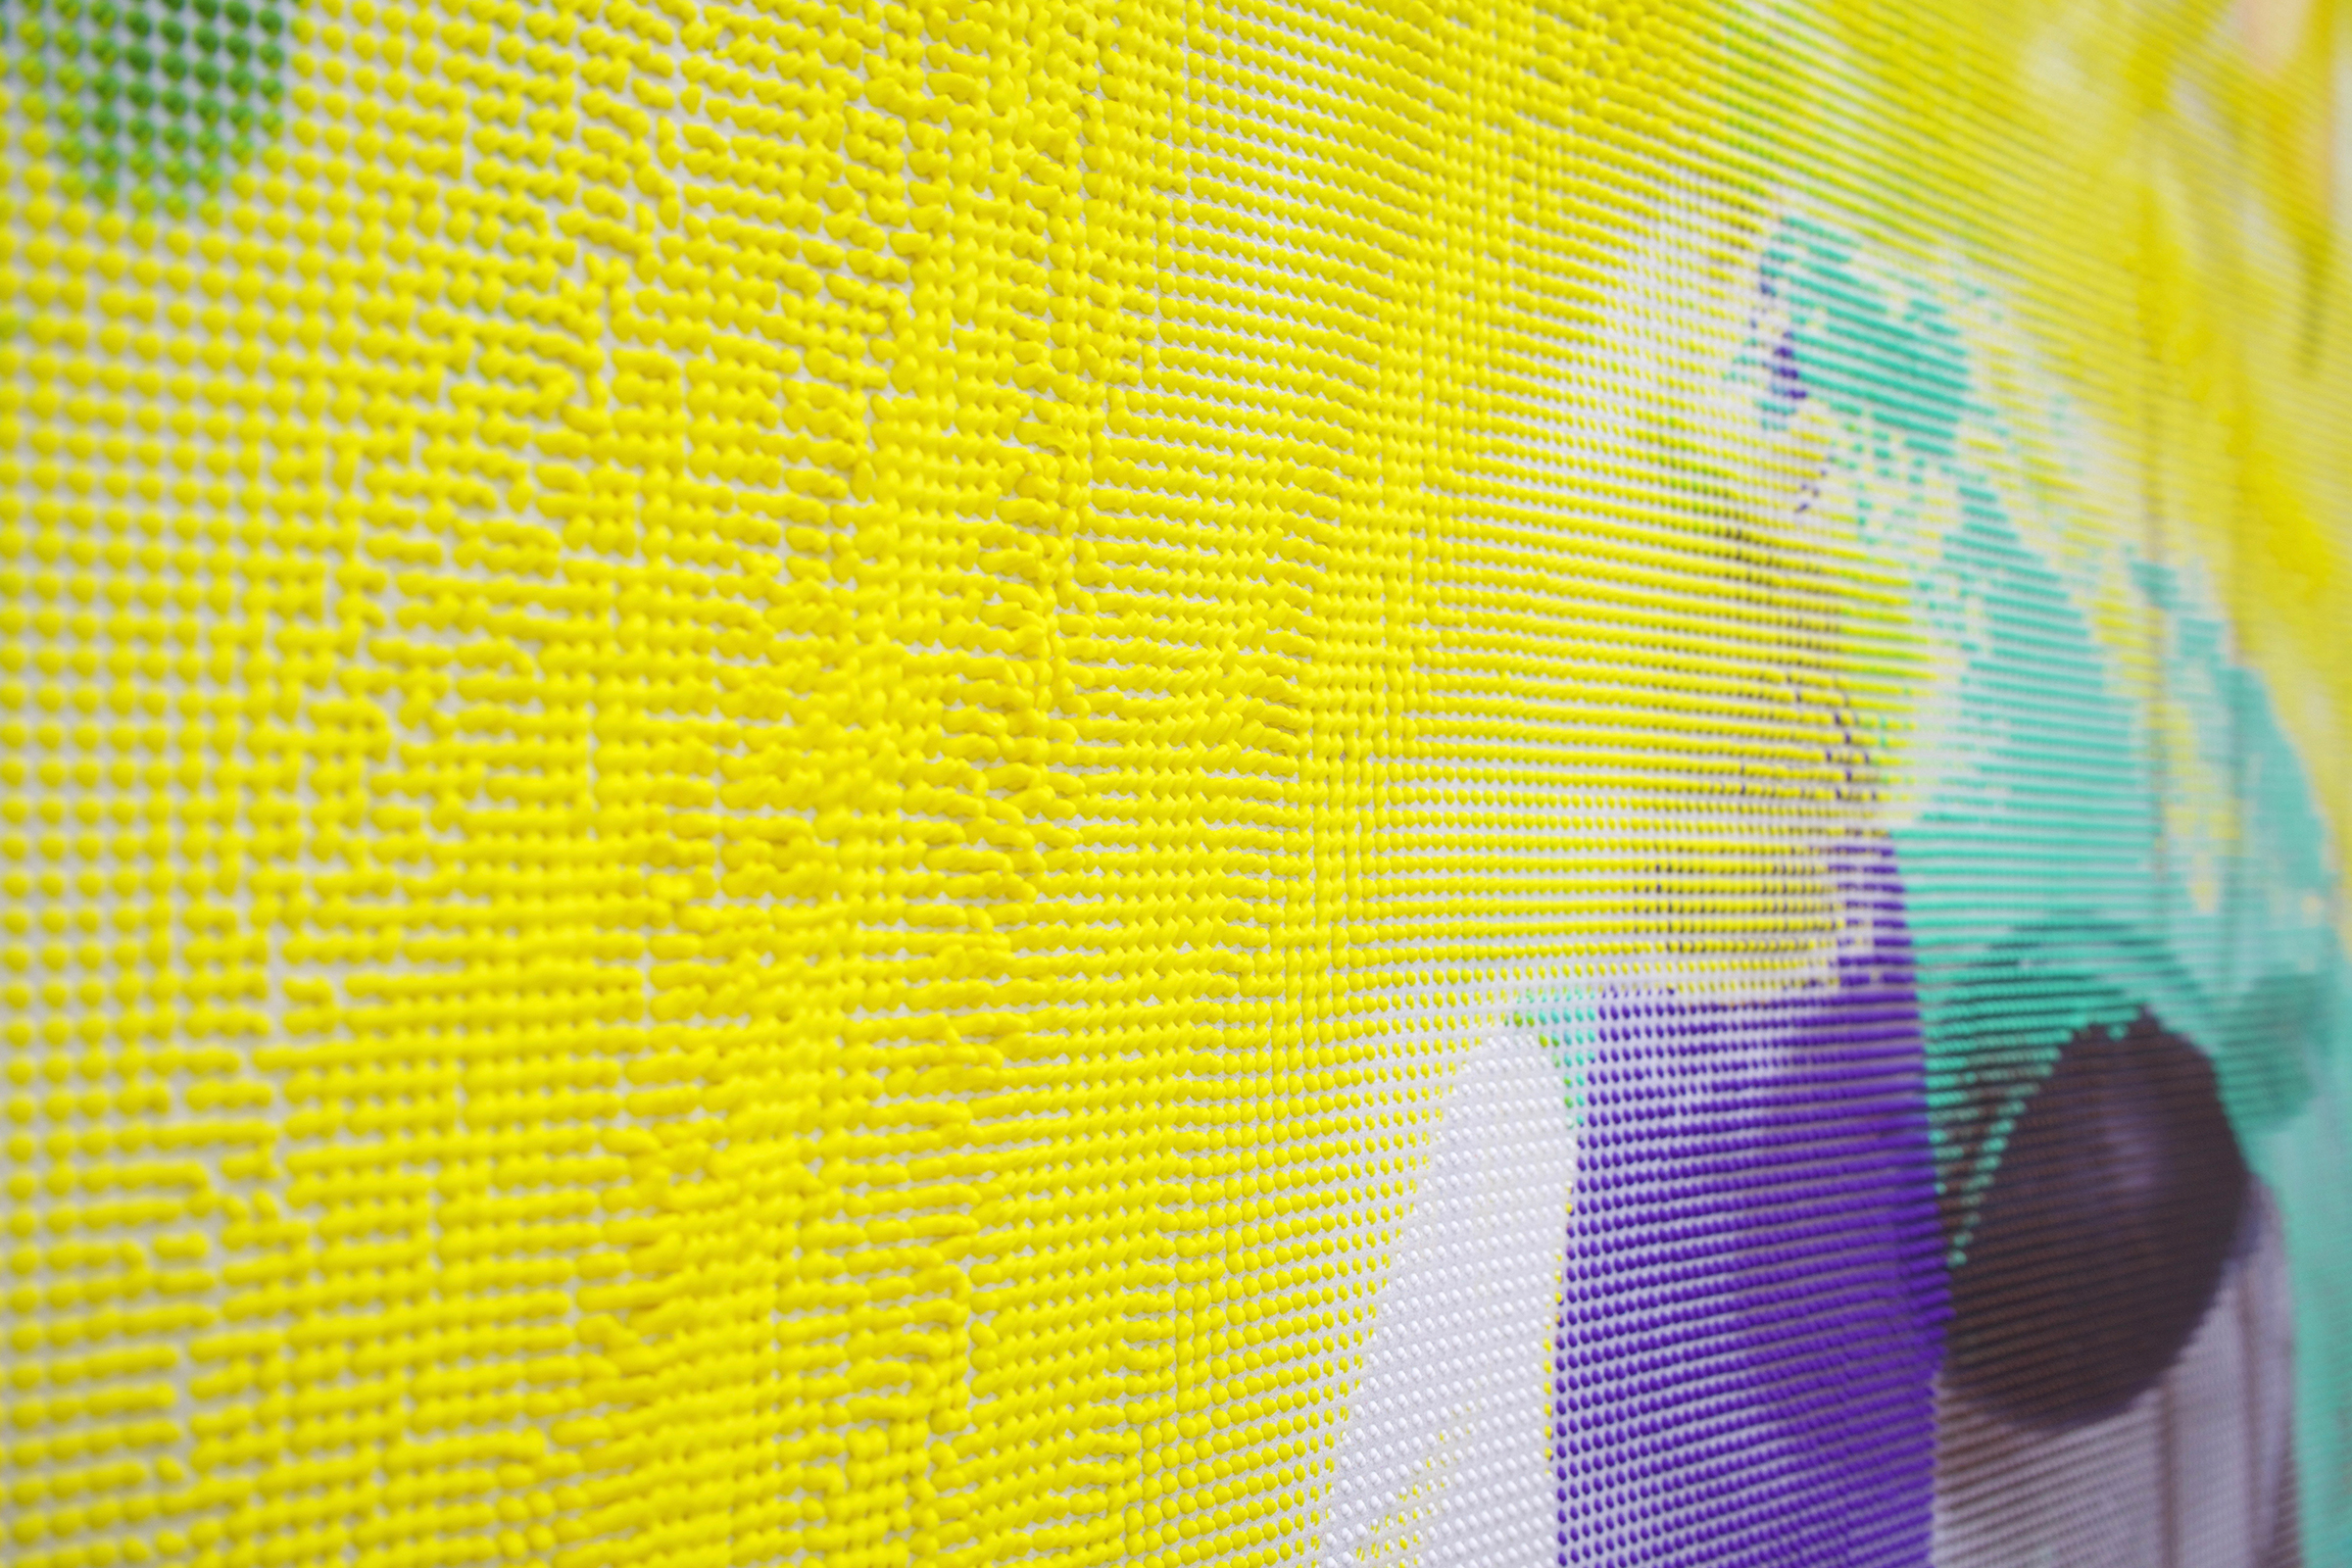  EVAN NESBIT (detail)  Manifold Painting (Perishable Gestures) , 2017, acrylic, UV curable ink on vinyl coated mesh fabric, 53” x 37” 